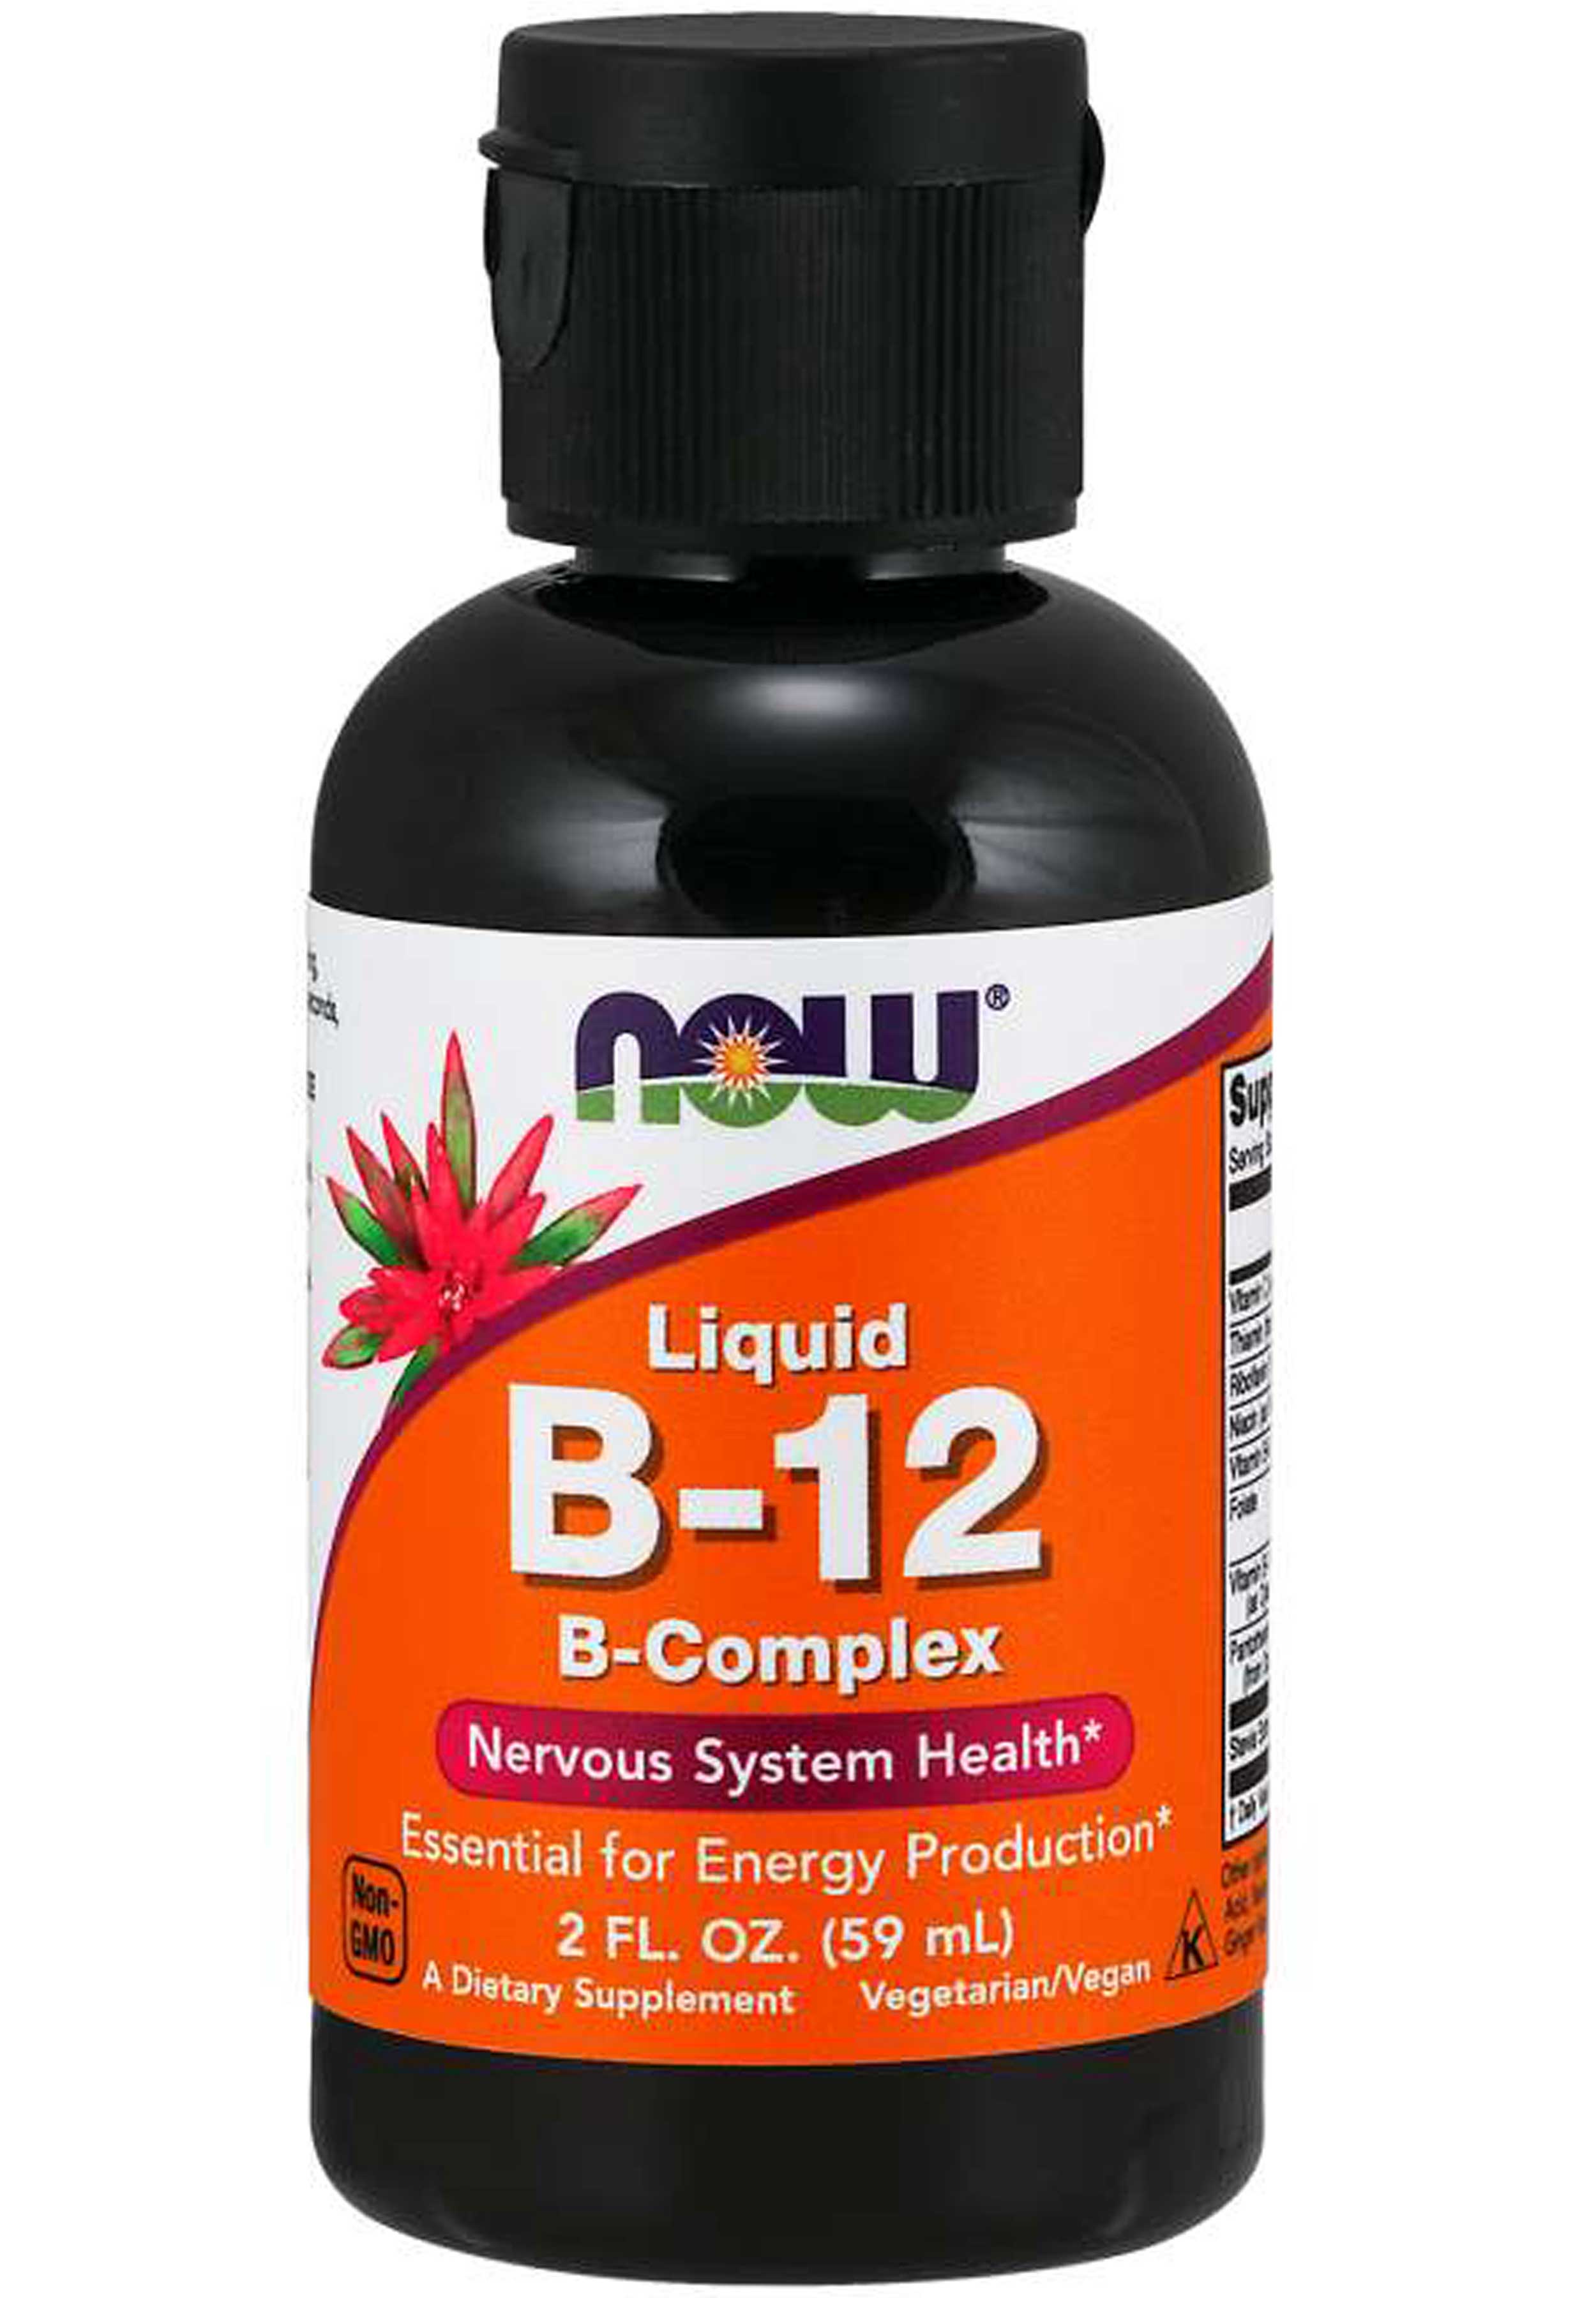 NOW Liquid B-12 B-Complex